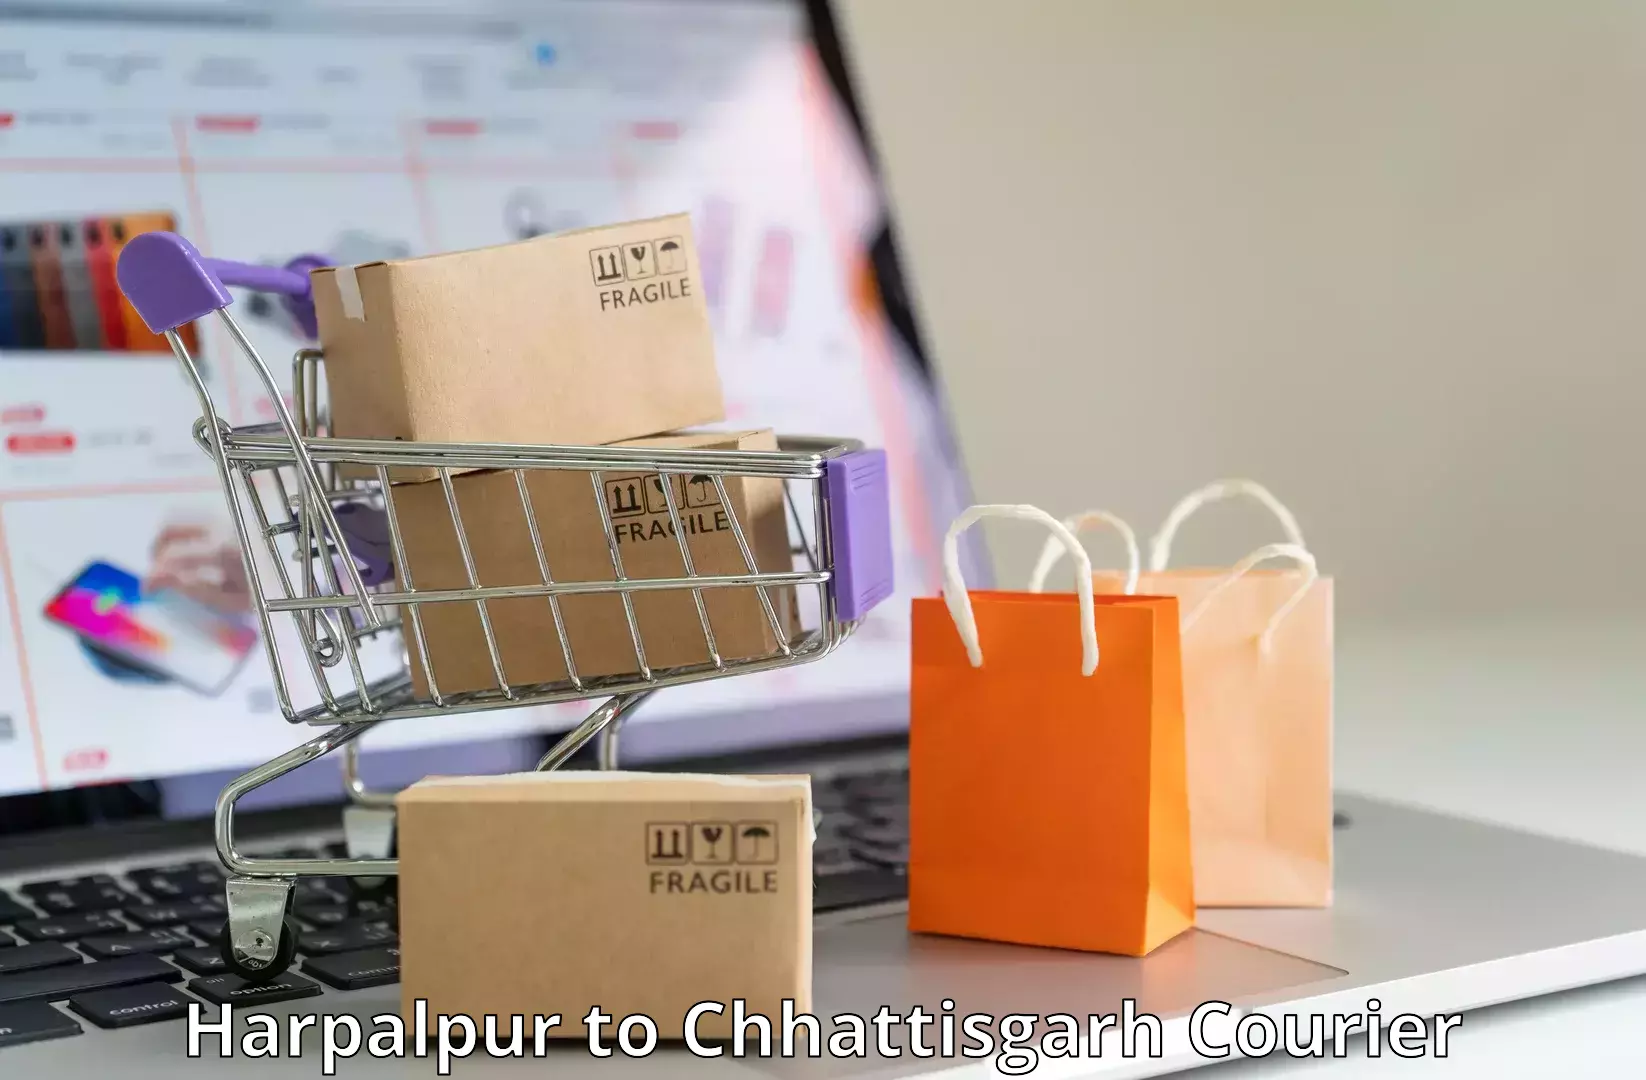 Express delivery capabilities Harpalpur to Patna Chhattisgarh